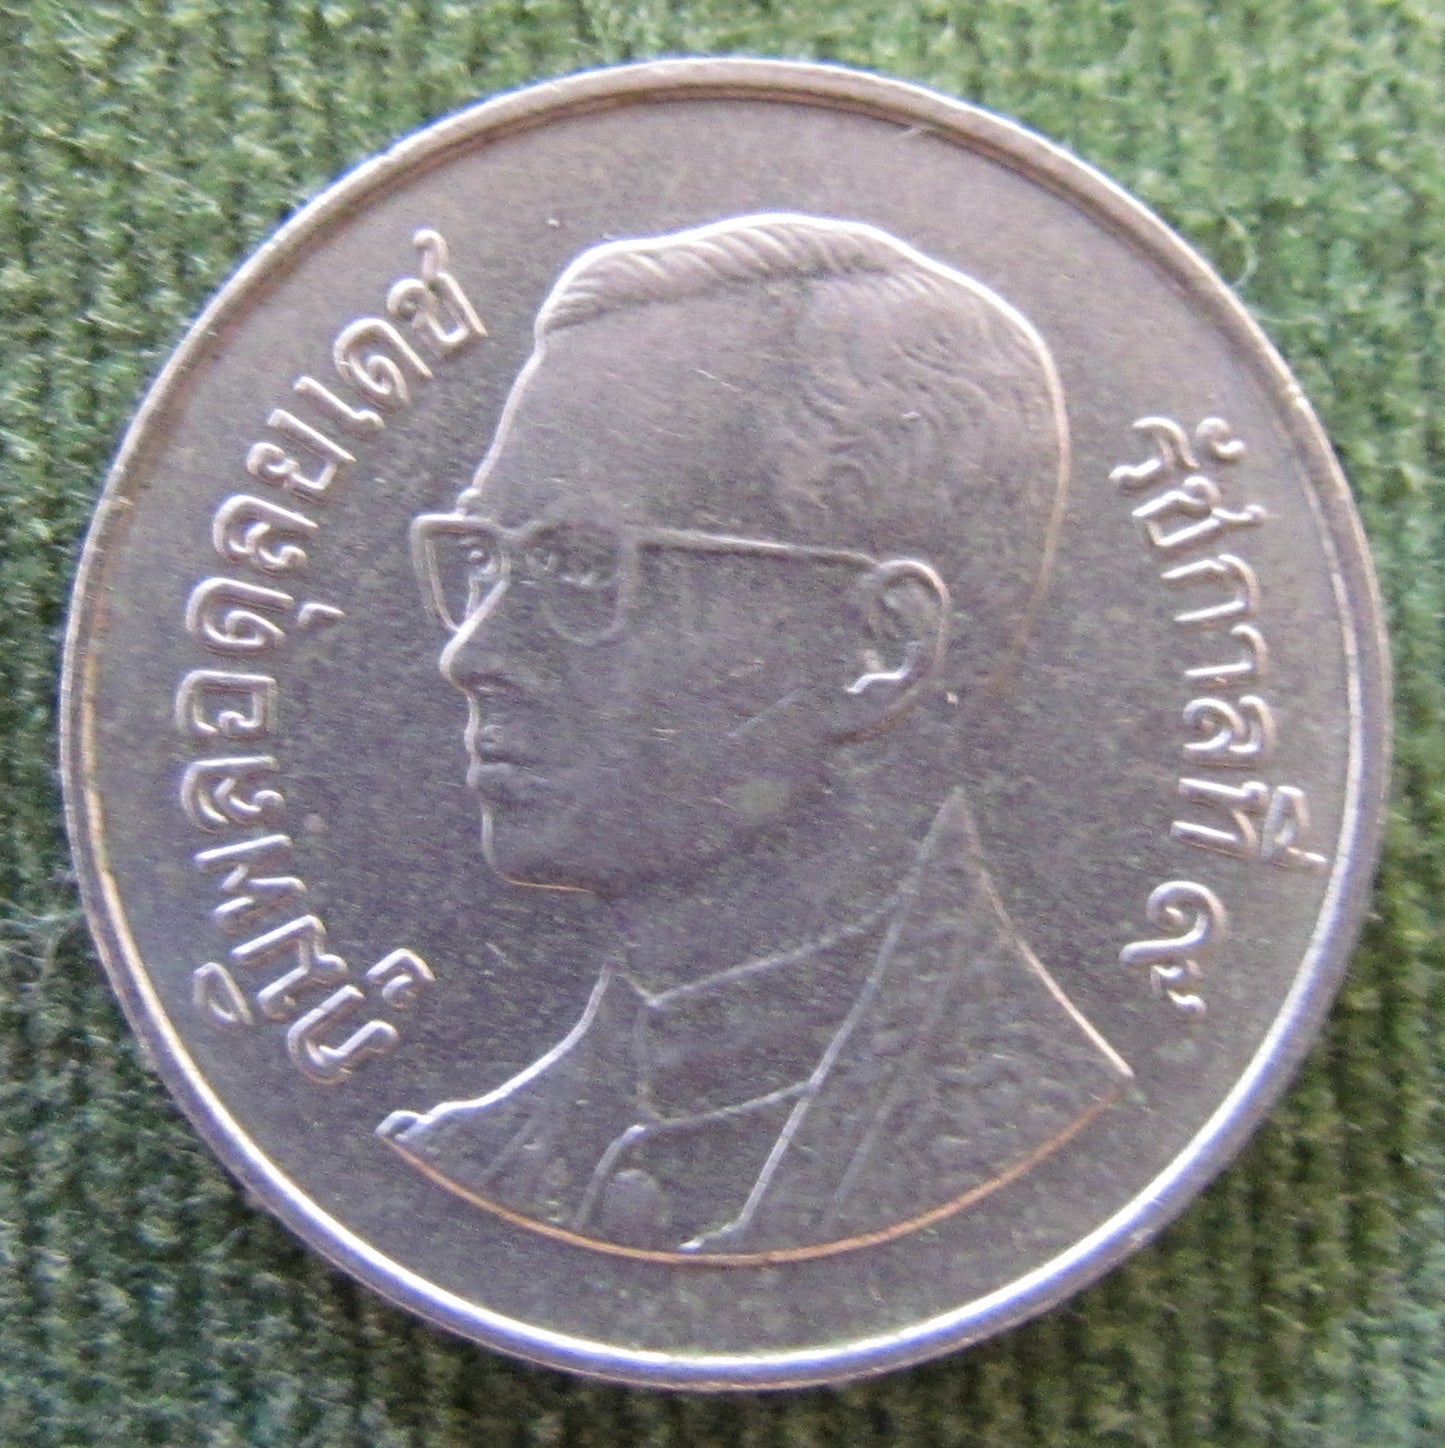 Thailand 1988 1 Baht King Rama IX Coin - Circulated